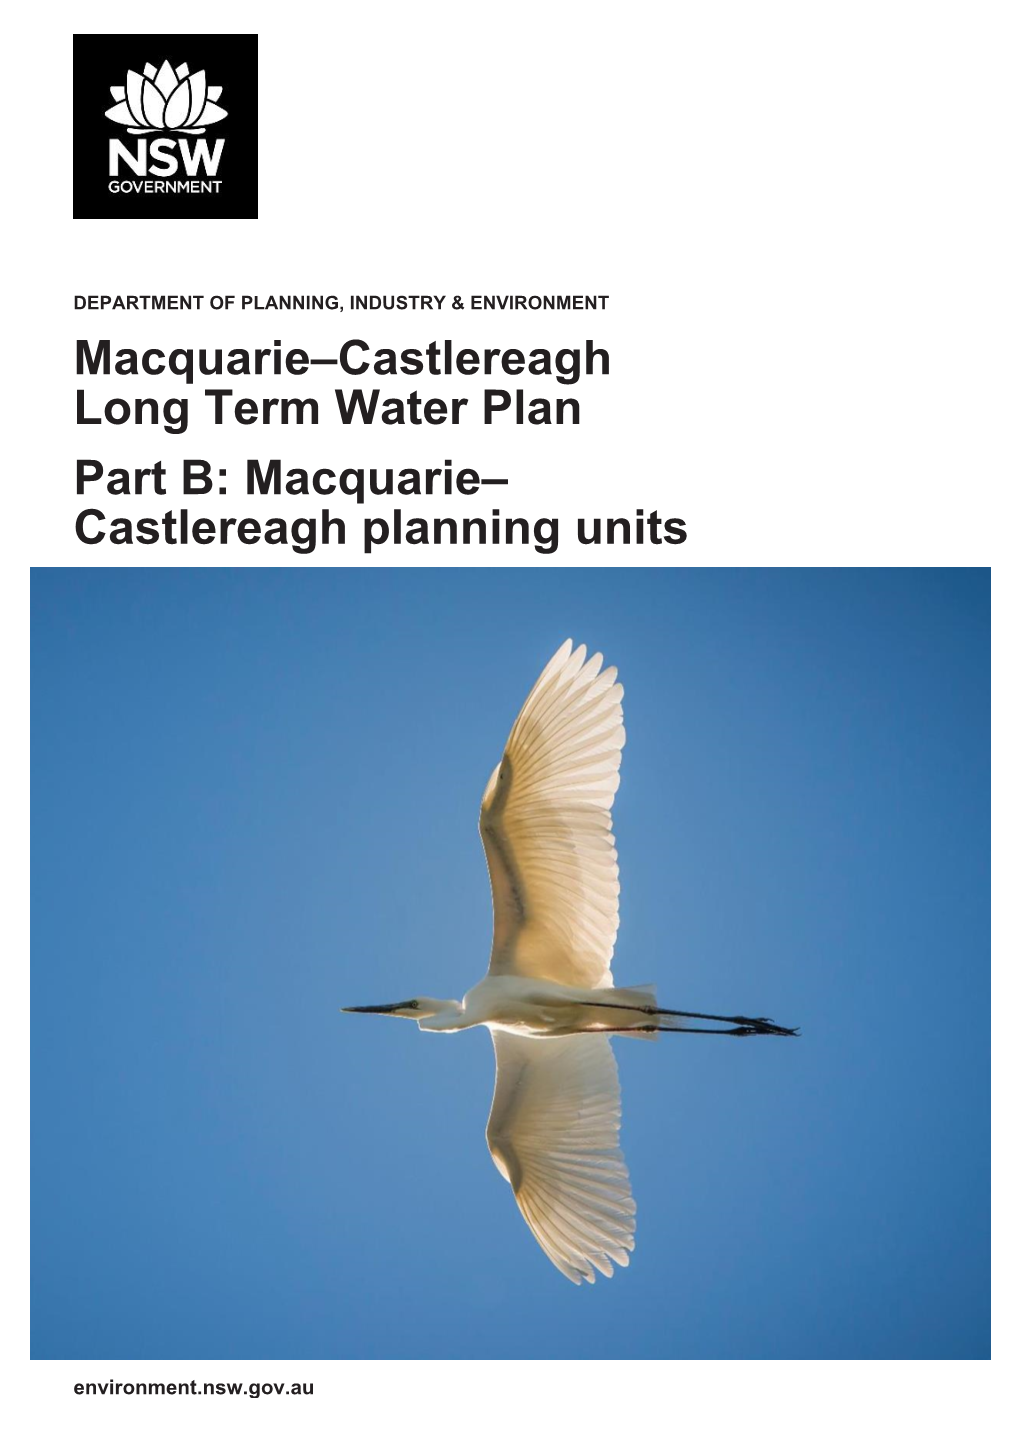 Macquarie-Castlereagh Long-Term Water Plan Part B